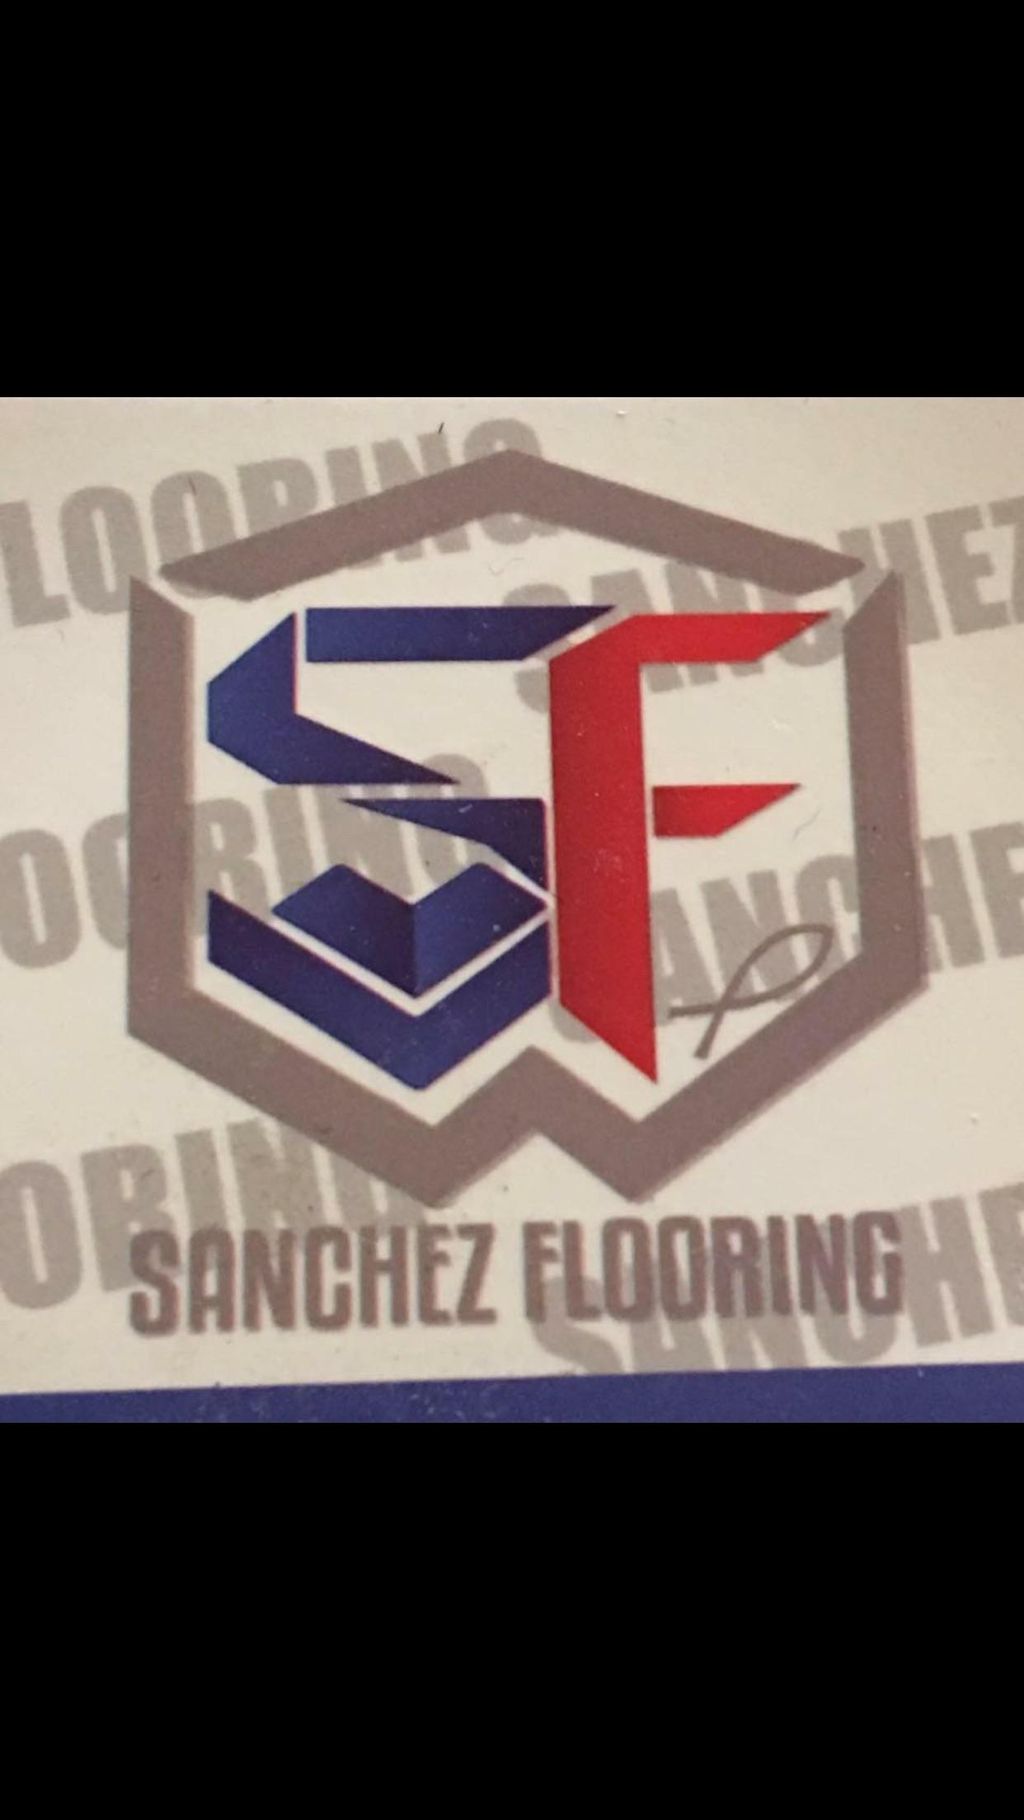 Sanchez flooring